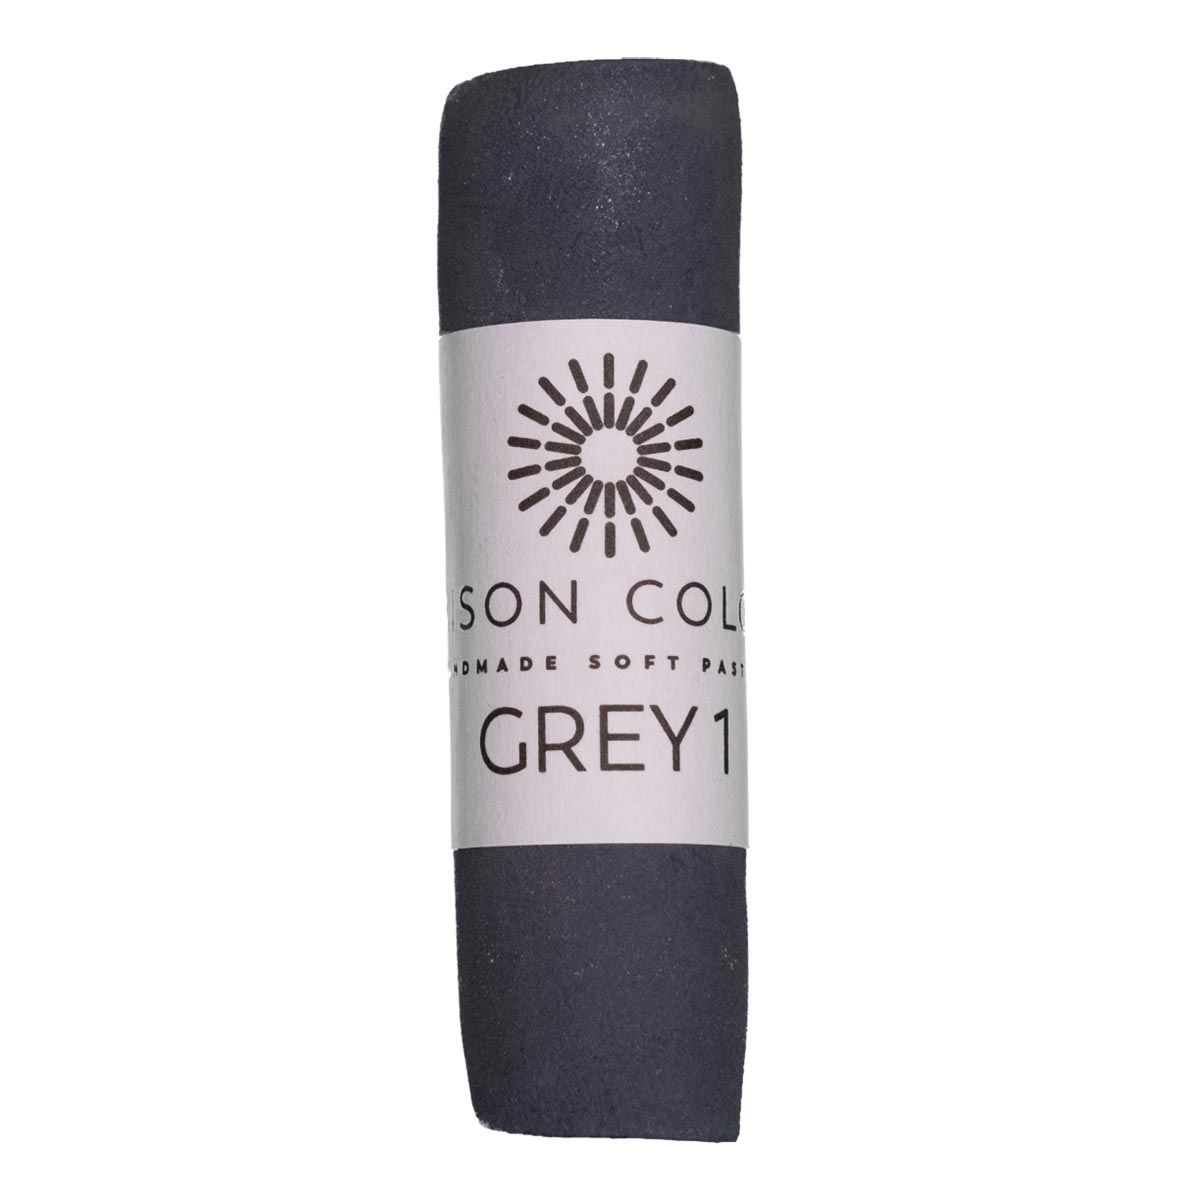 Unison Pastel - Grey 1